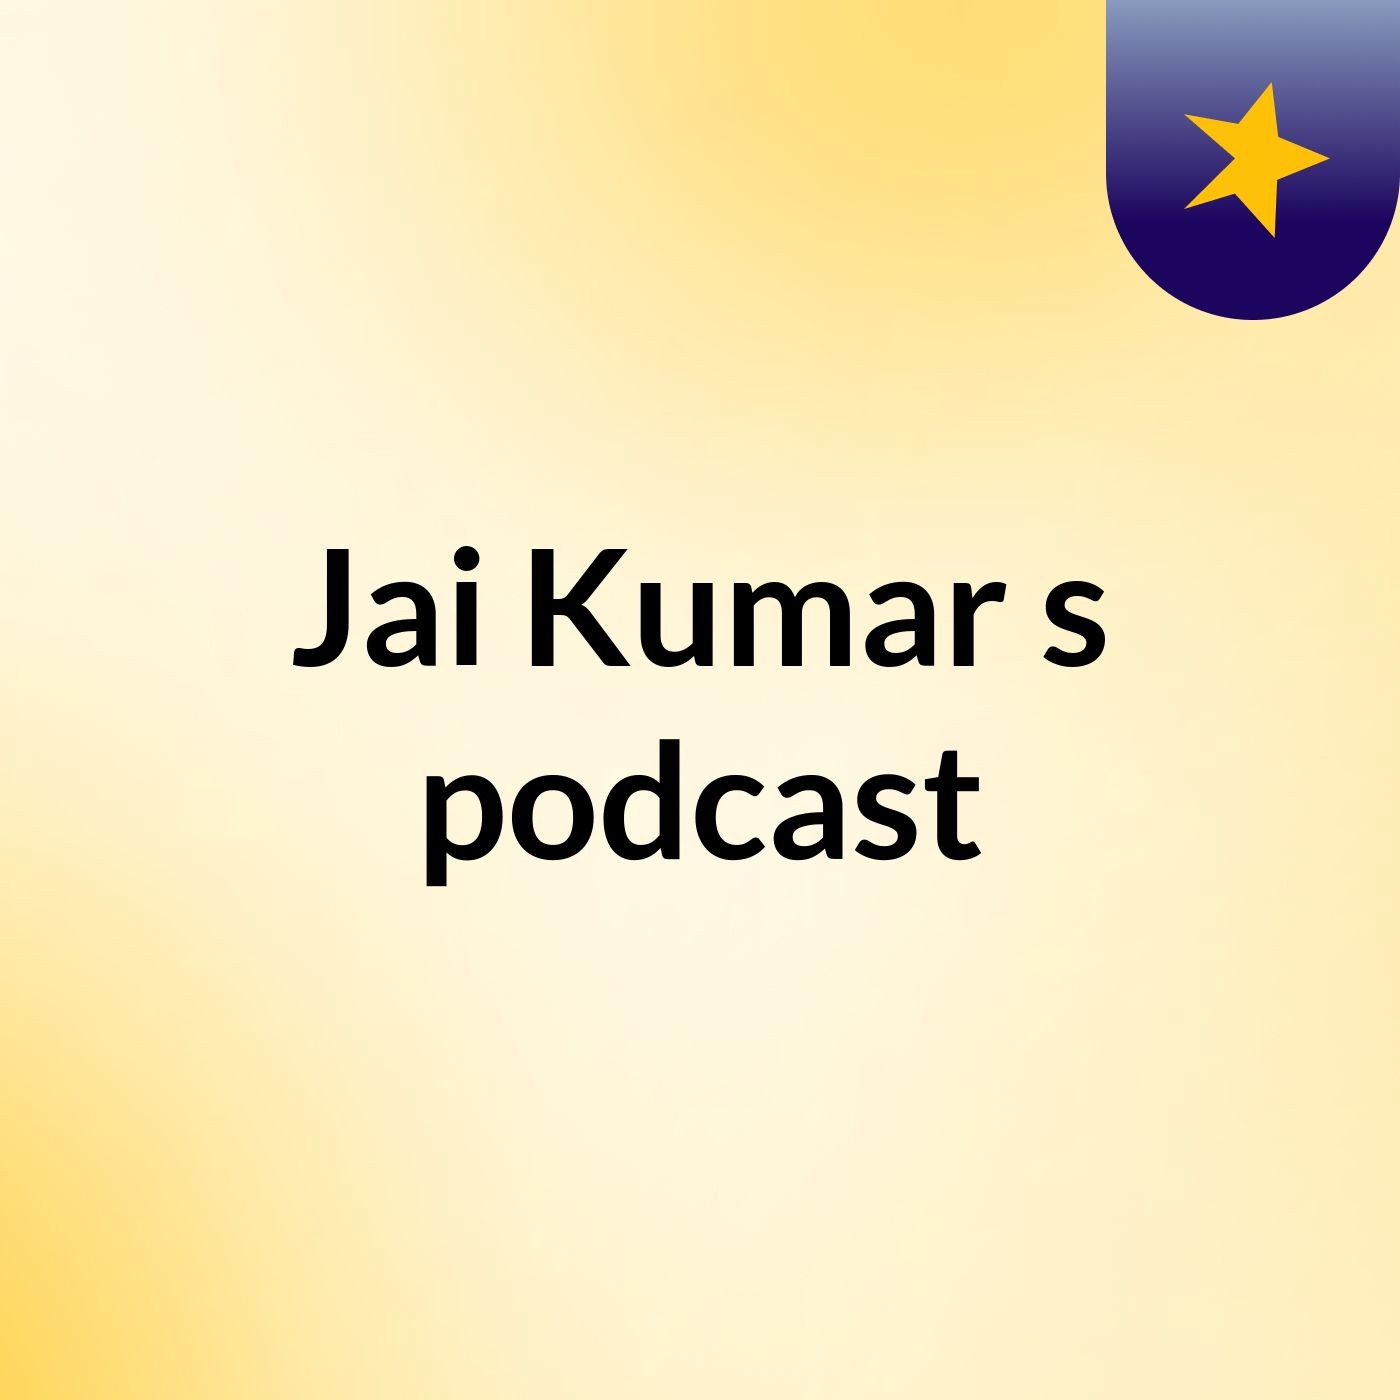 Jai Kumar's podcast